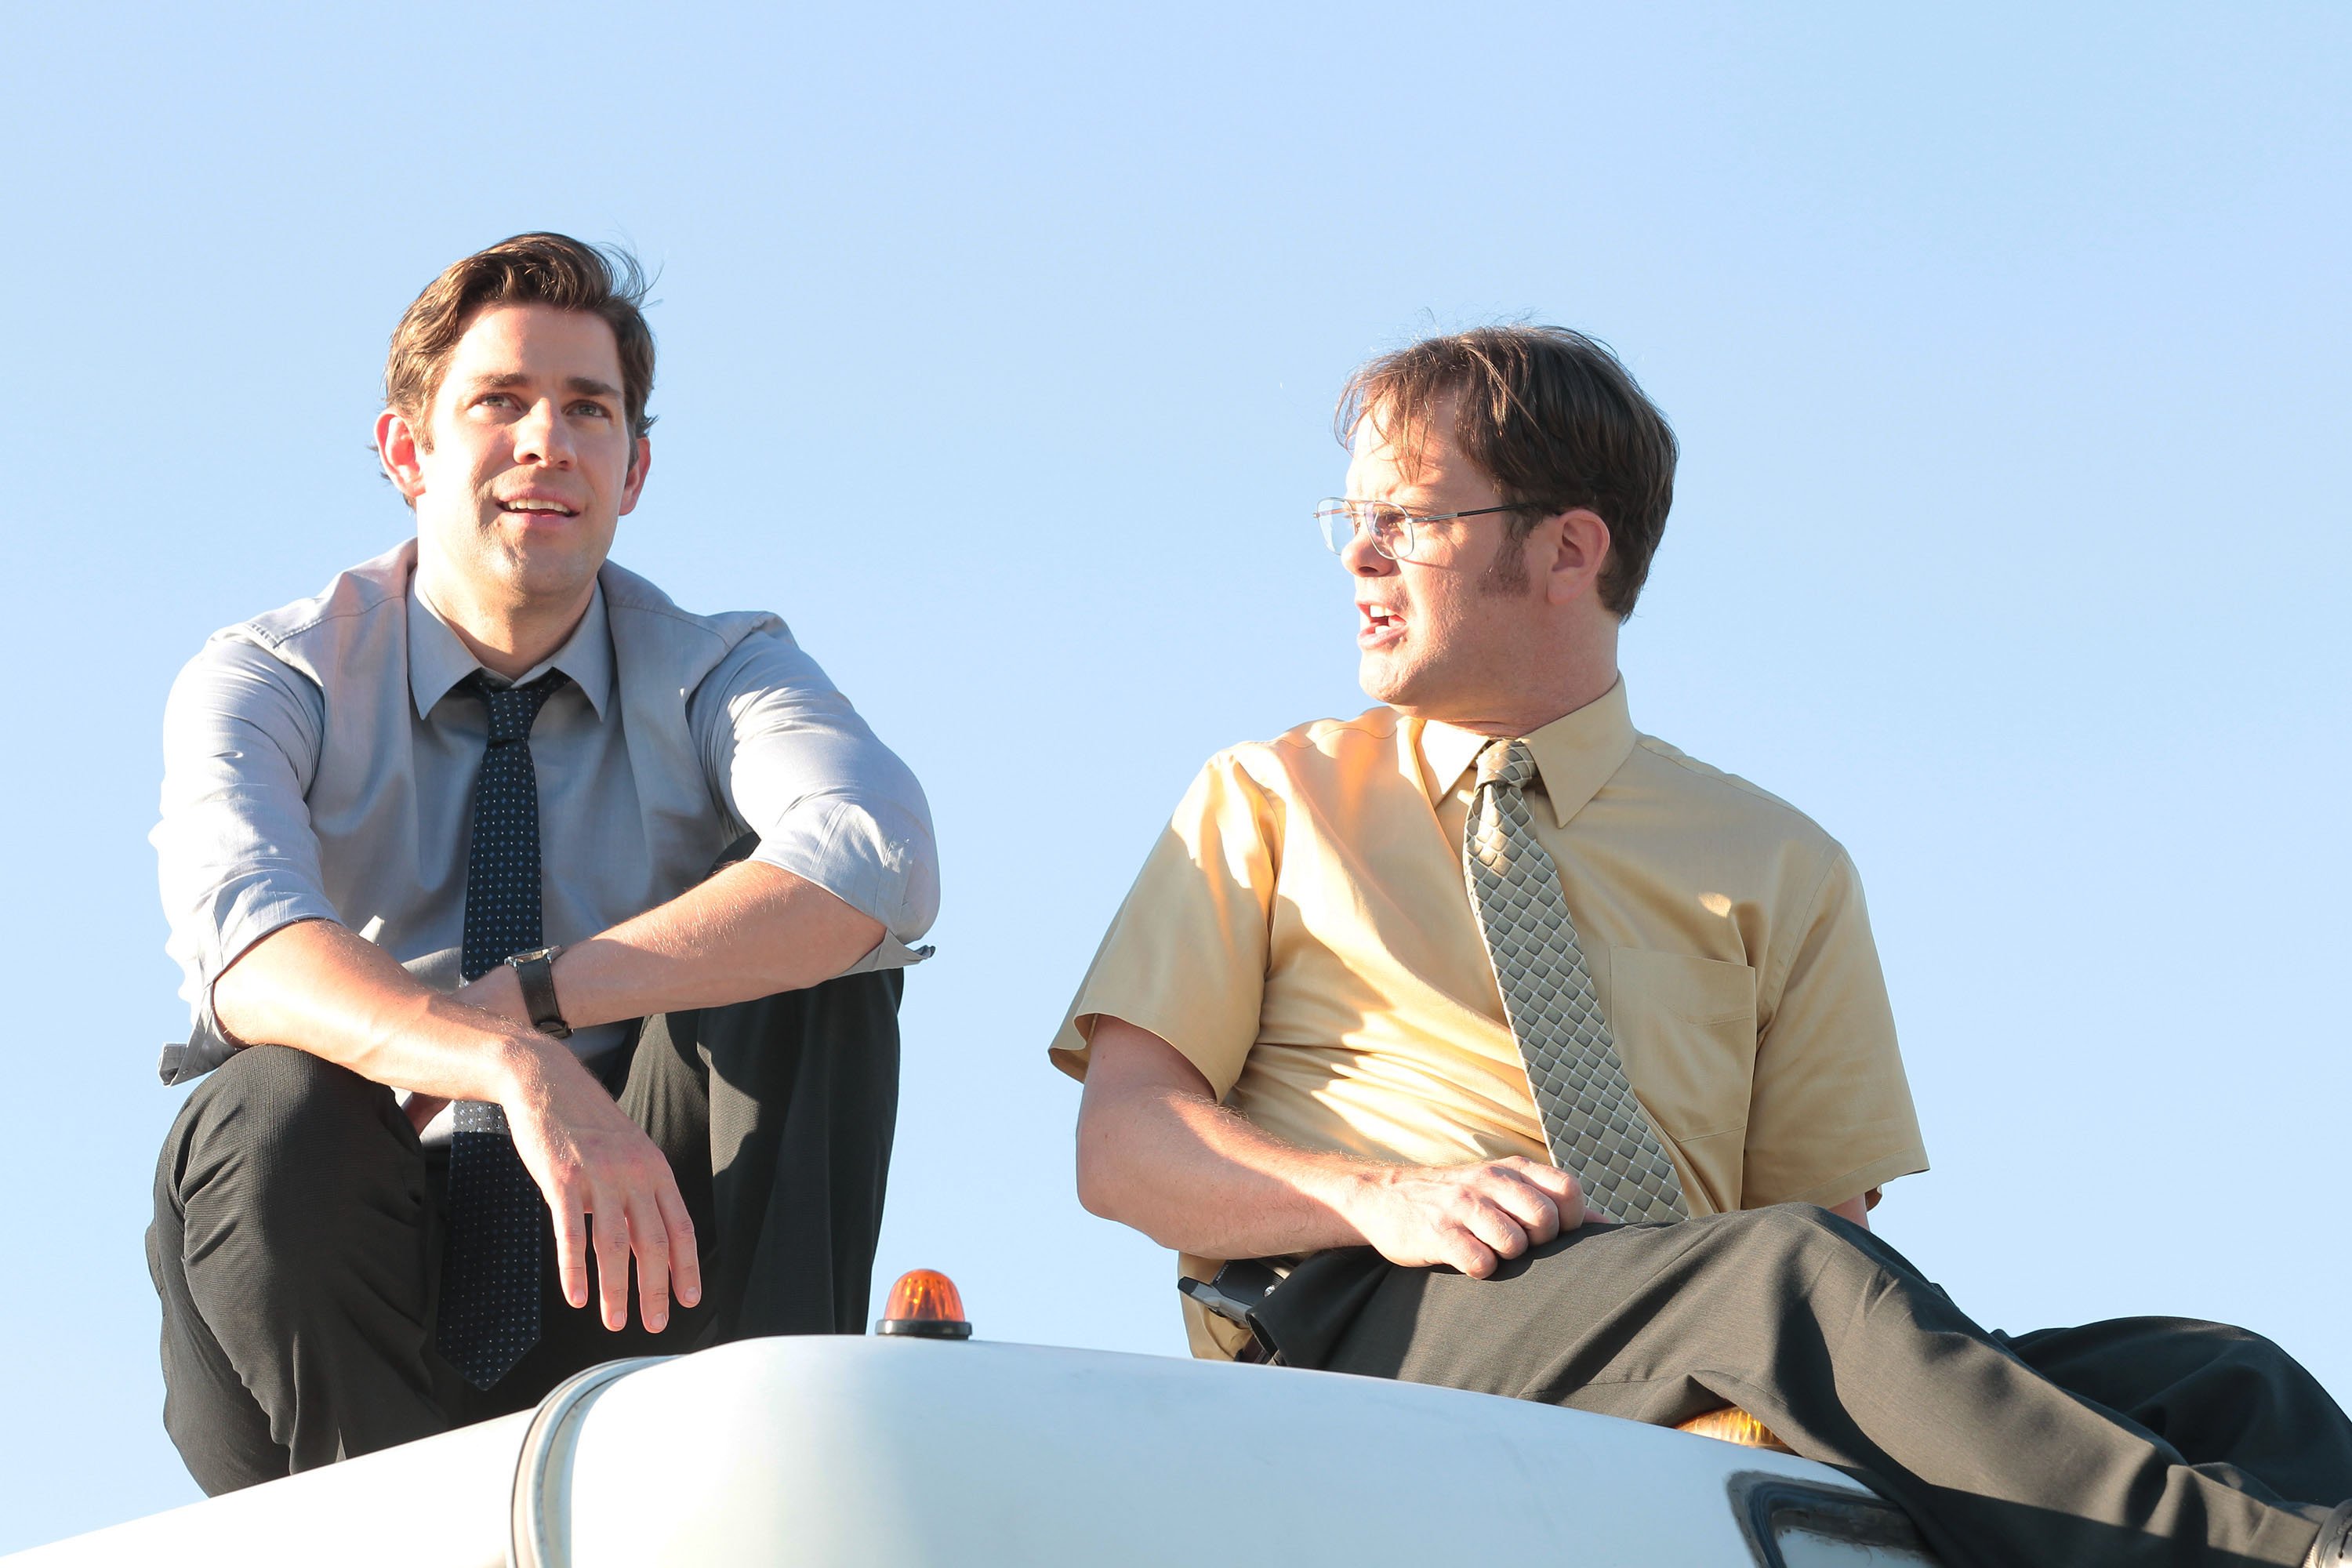 The Office stars John Krasinski and Rainn Wilson as Jim and Dwight on top of a bus